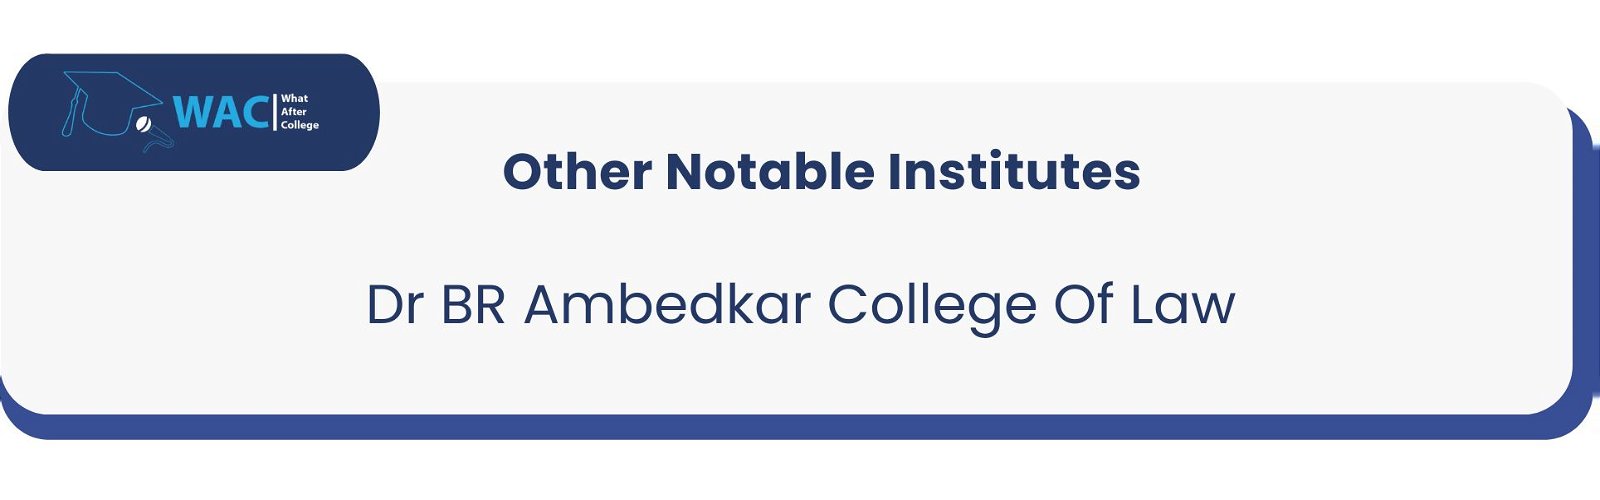 Dr BR Ambedkar College Of Law